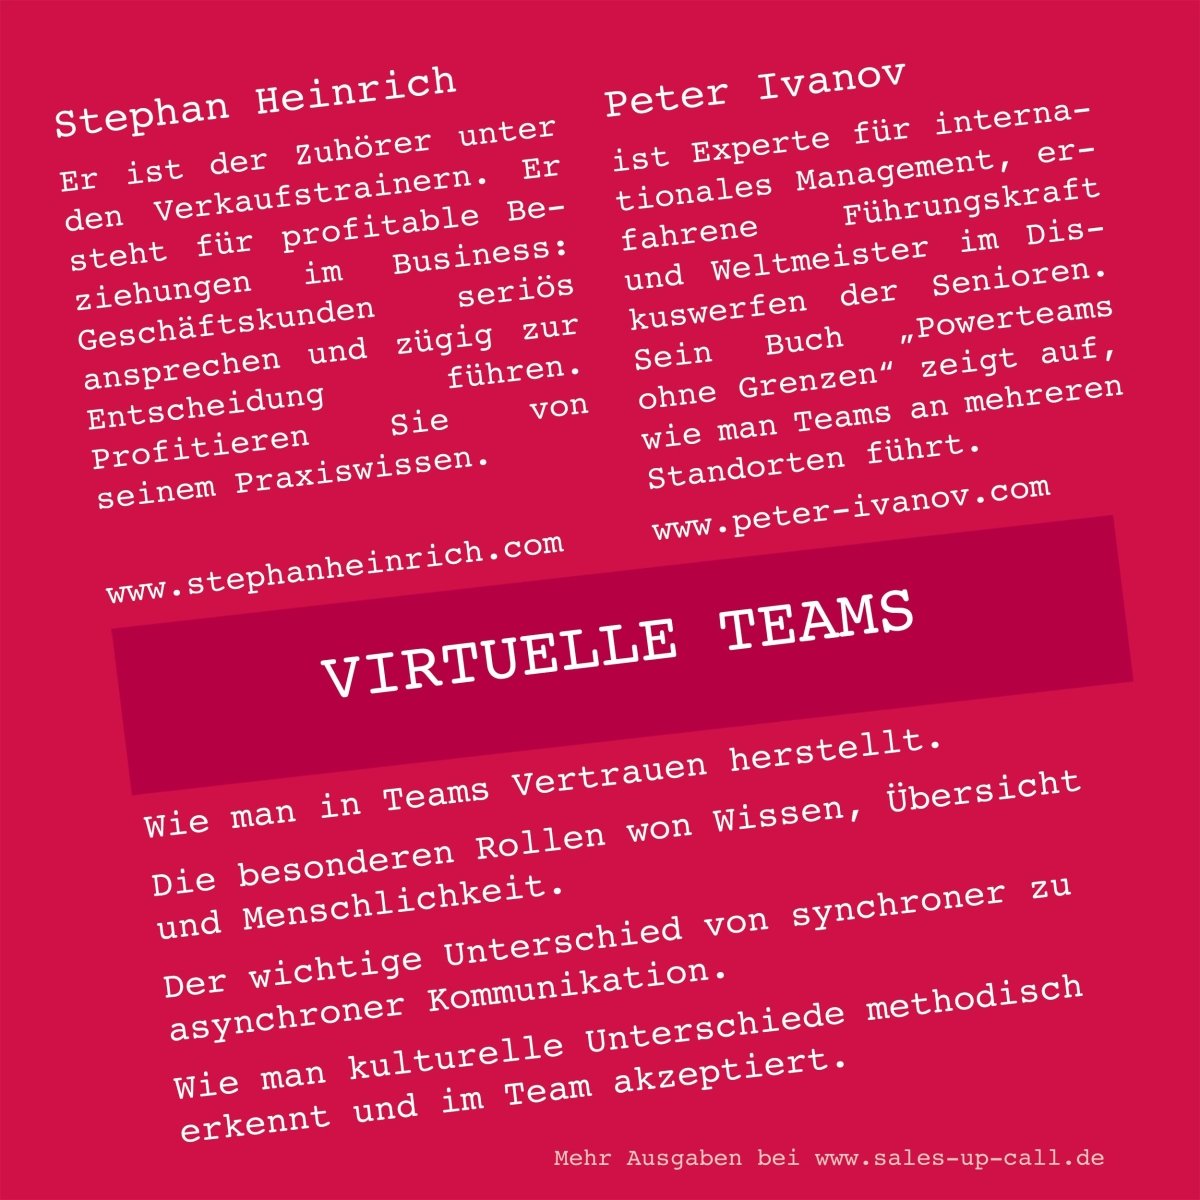 Virtuelle Teams - Sales-up-Call - Stephan Heinrich